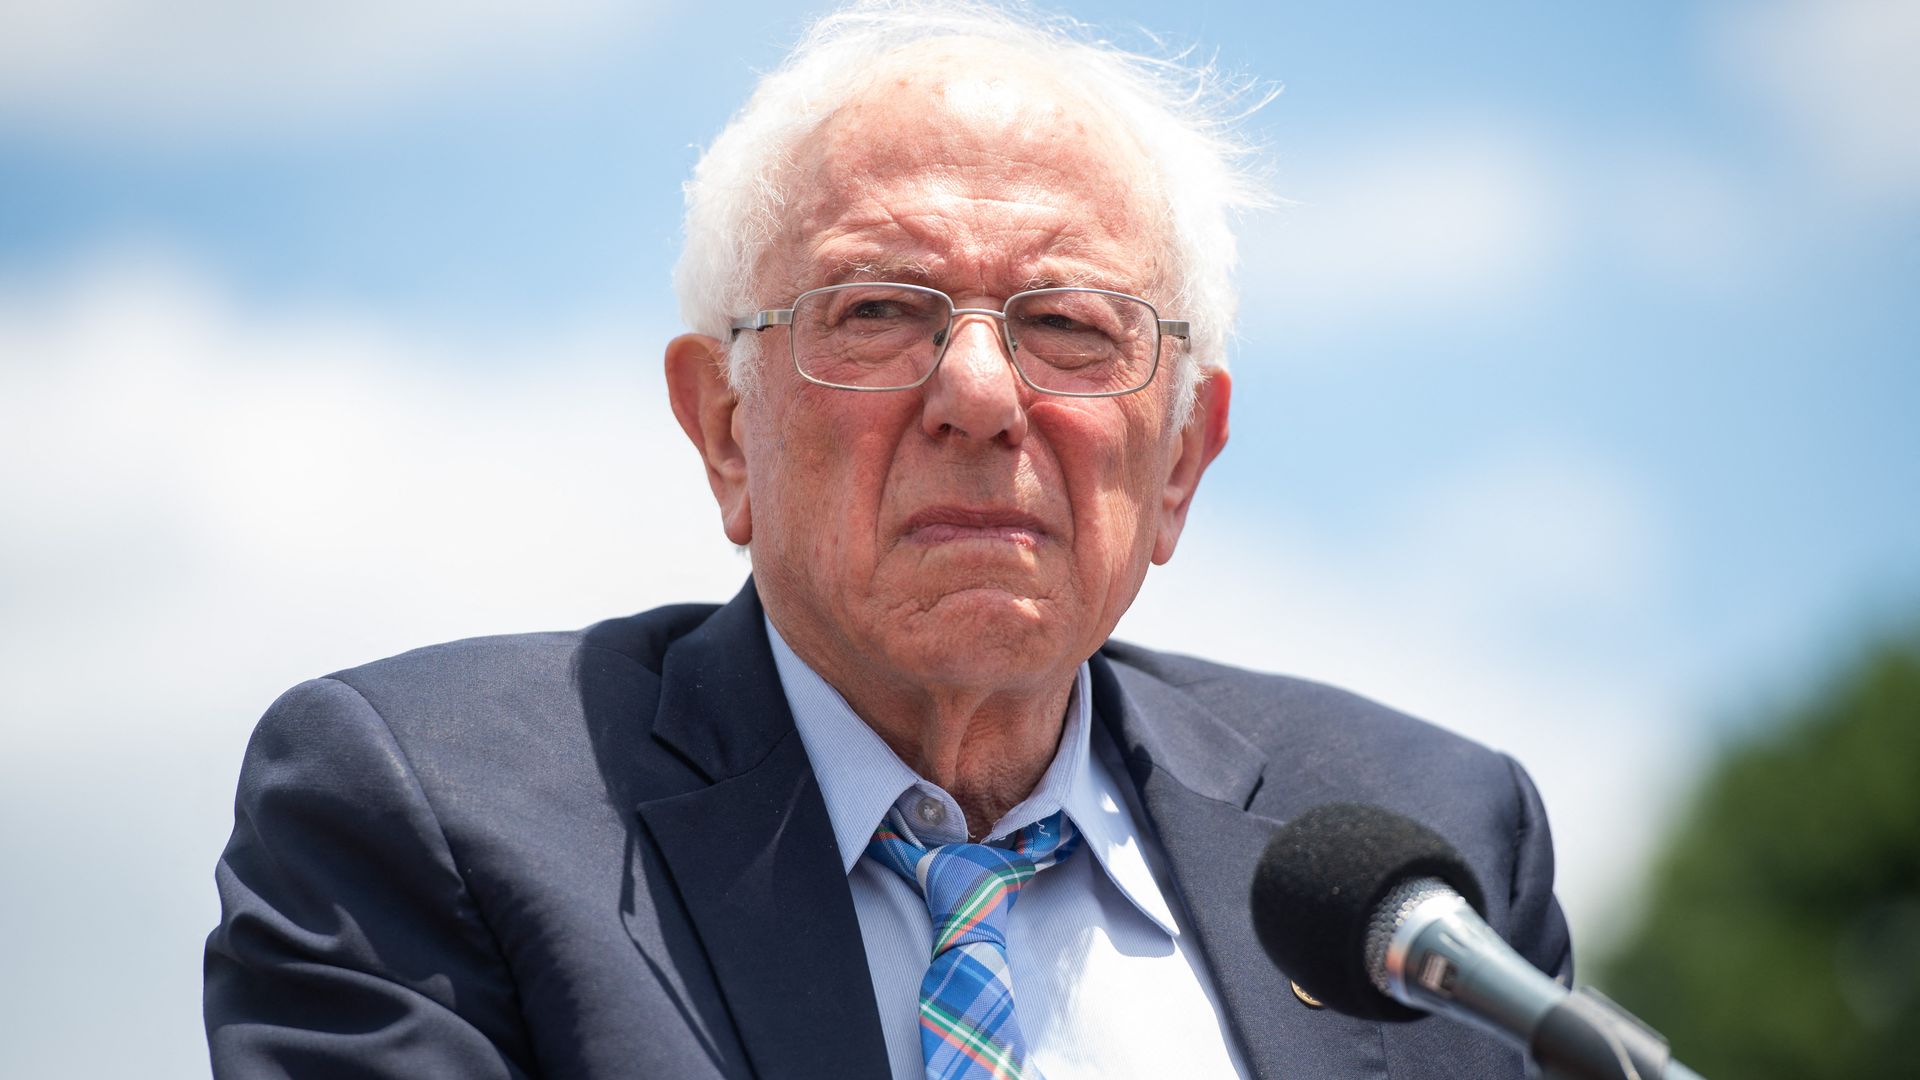 Sen. Bernie Sanders is seen speaking during an outdoor rally in Washington.